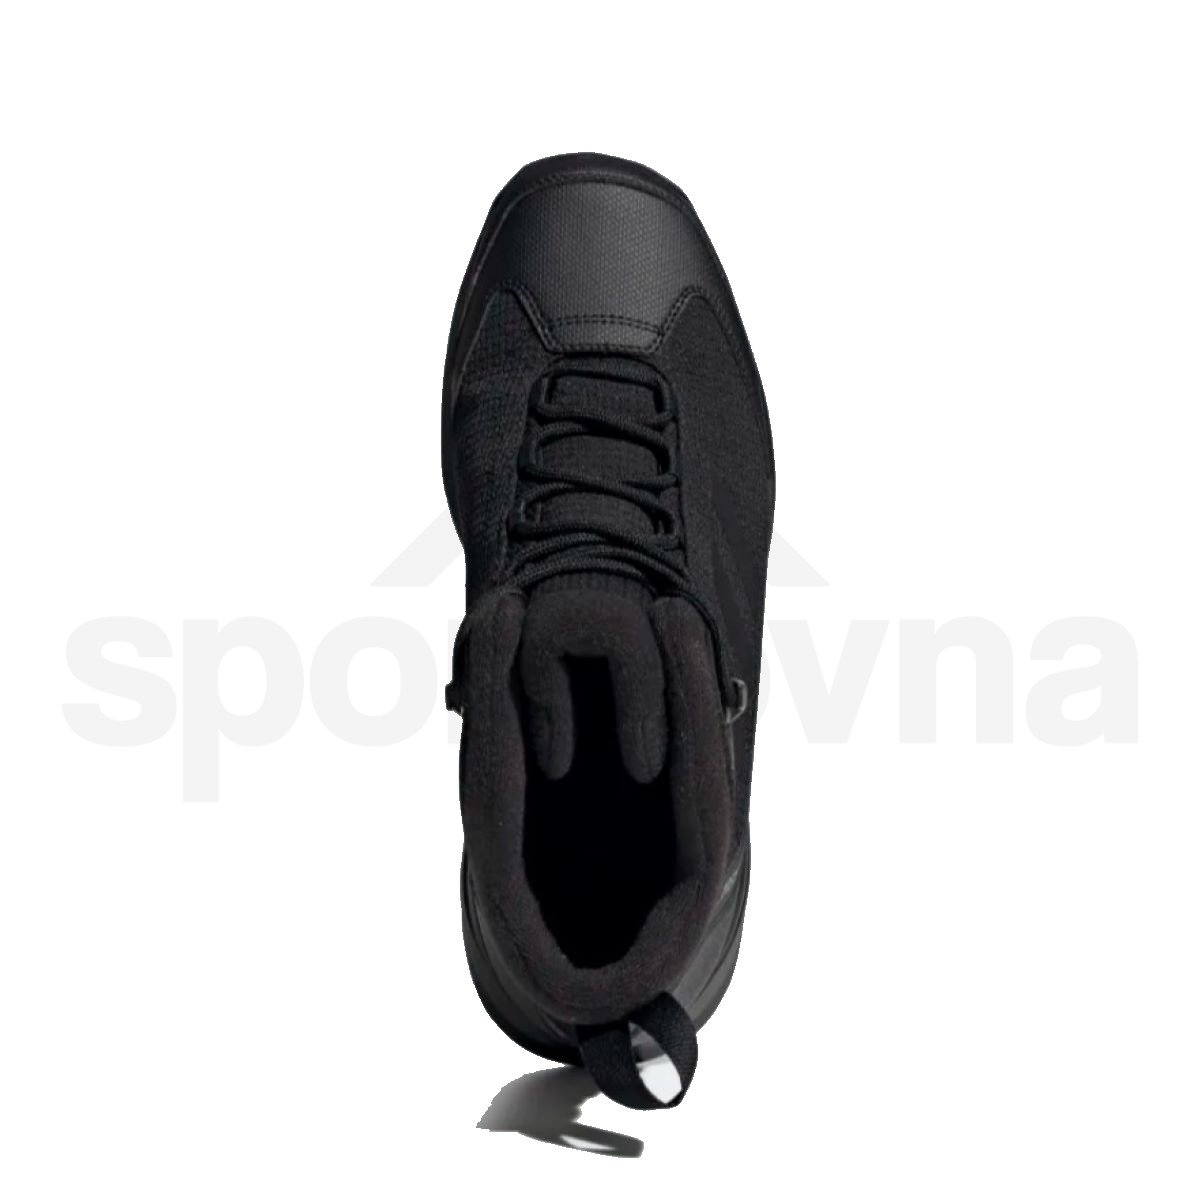 Obuv Adidas Terrex Frozetrack Mid M - černá